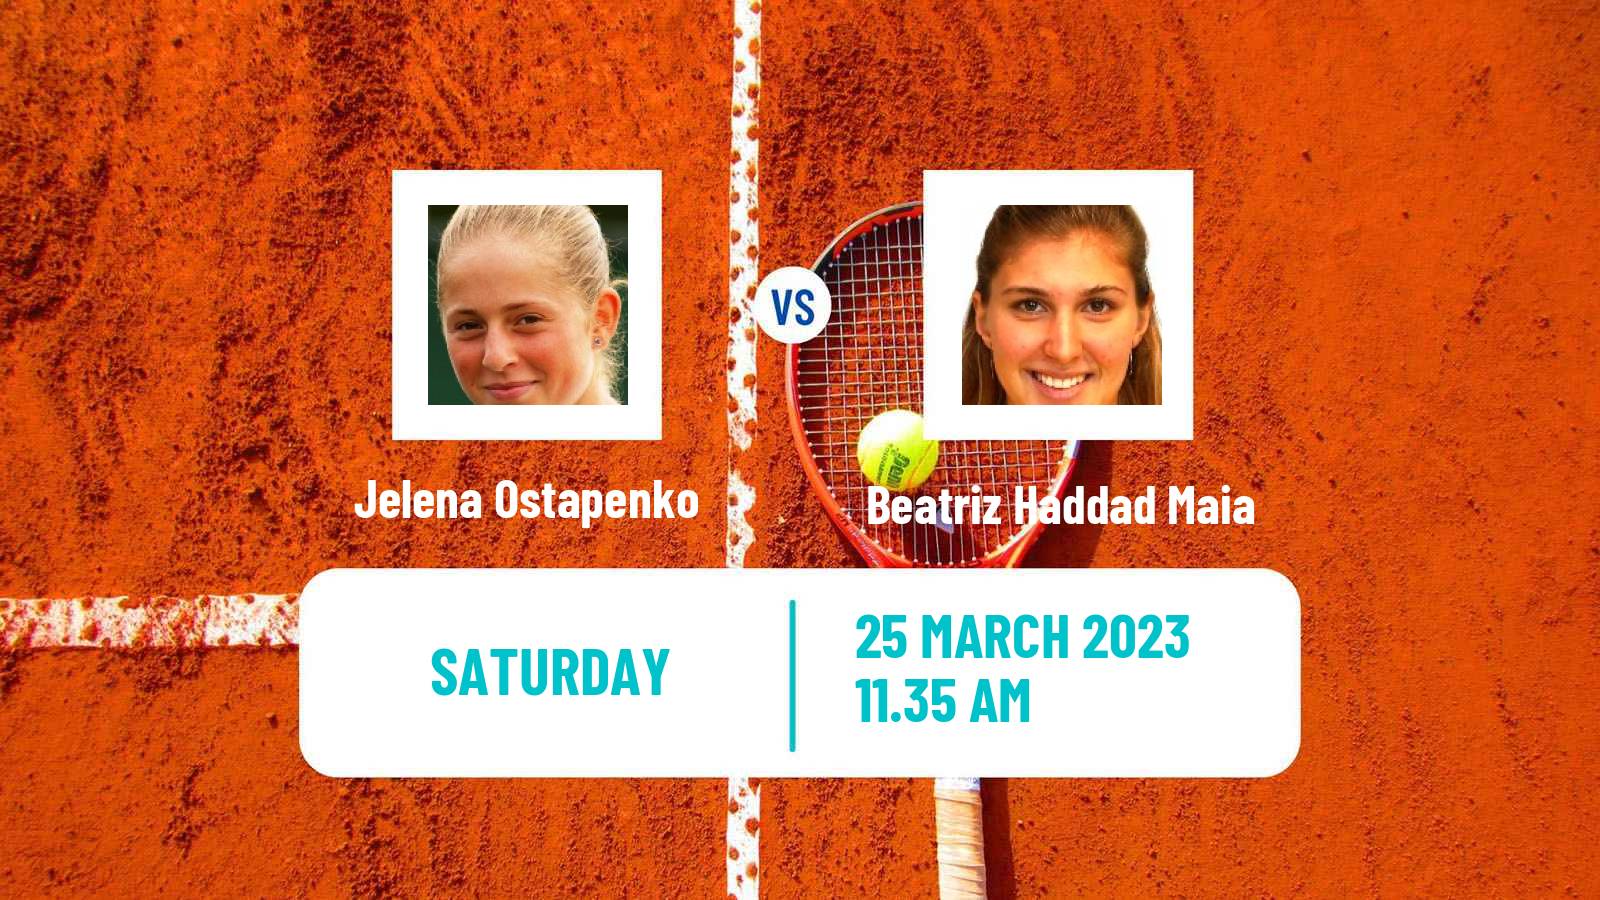 Tennis WTA Miami Jelena Ostapenko - Beatriz Haddad Maia